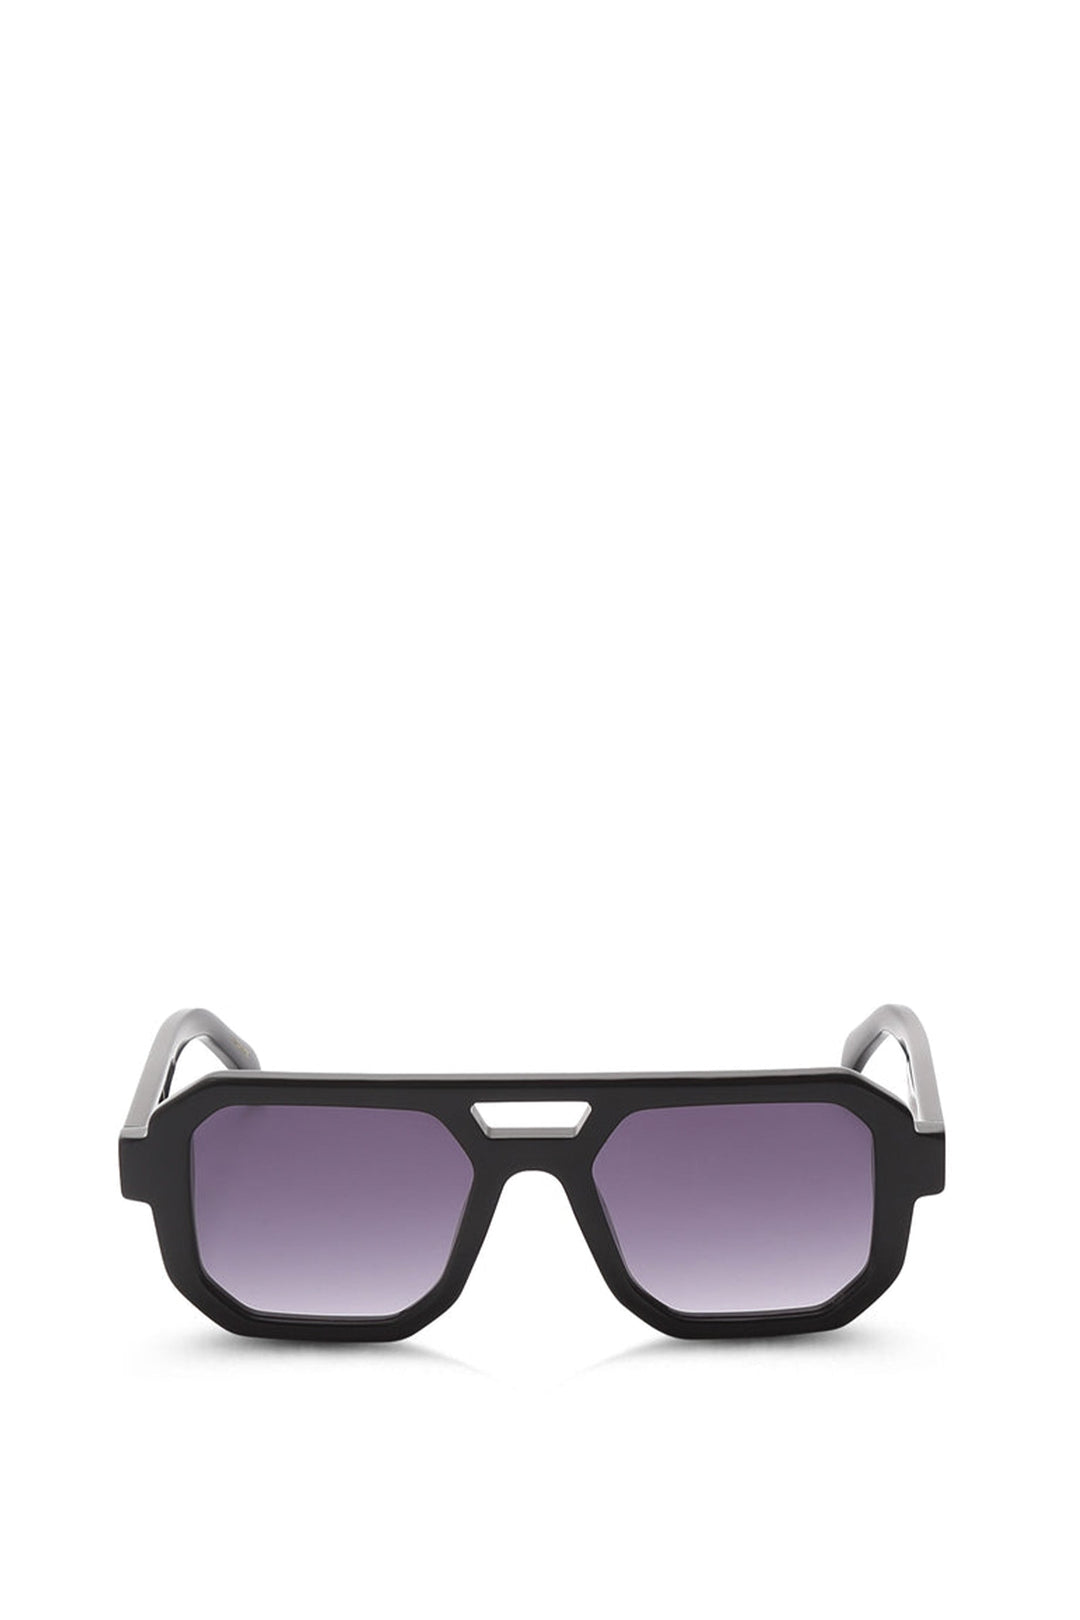 g.o.d 34 Sunglasses - Black